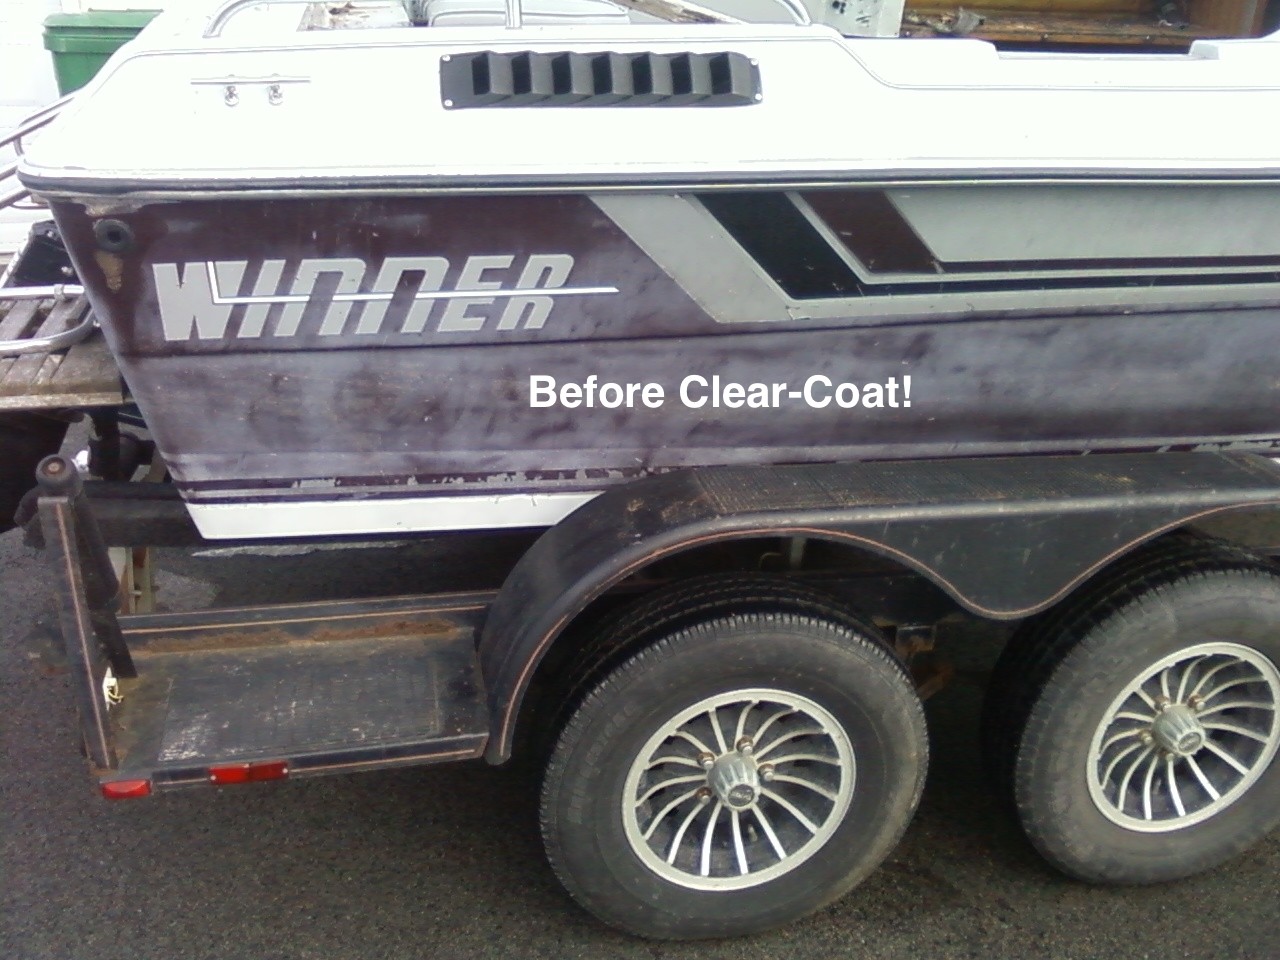 Toon-brite Fiberglass Boat Cleaner